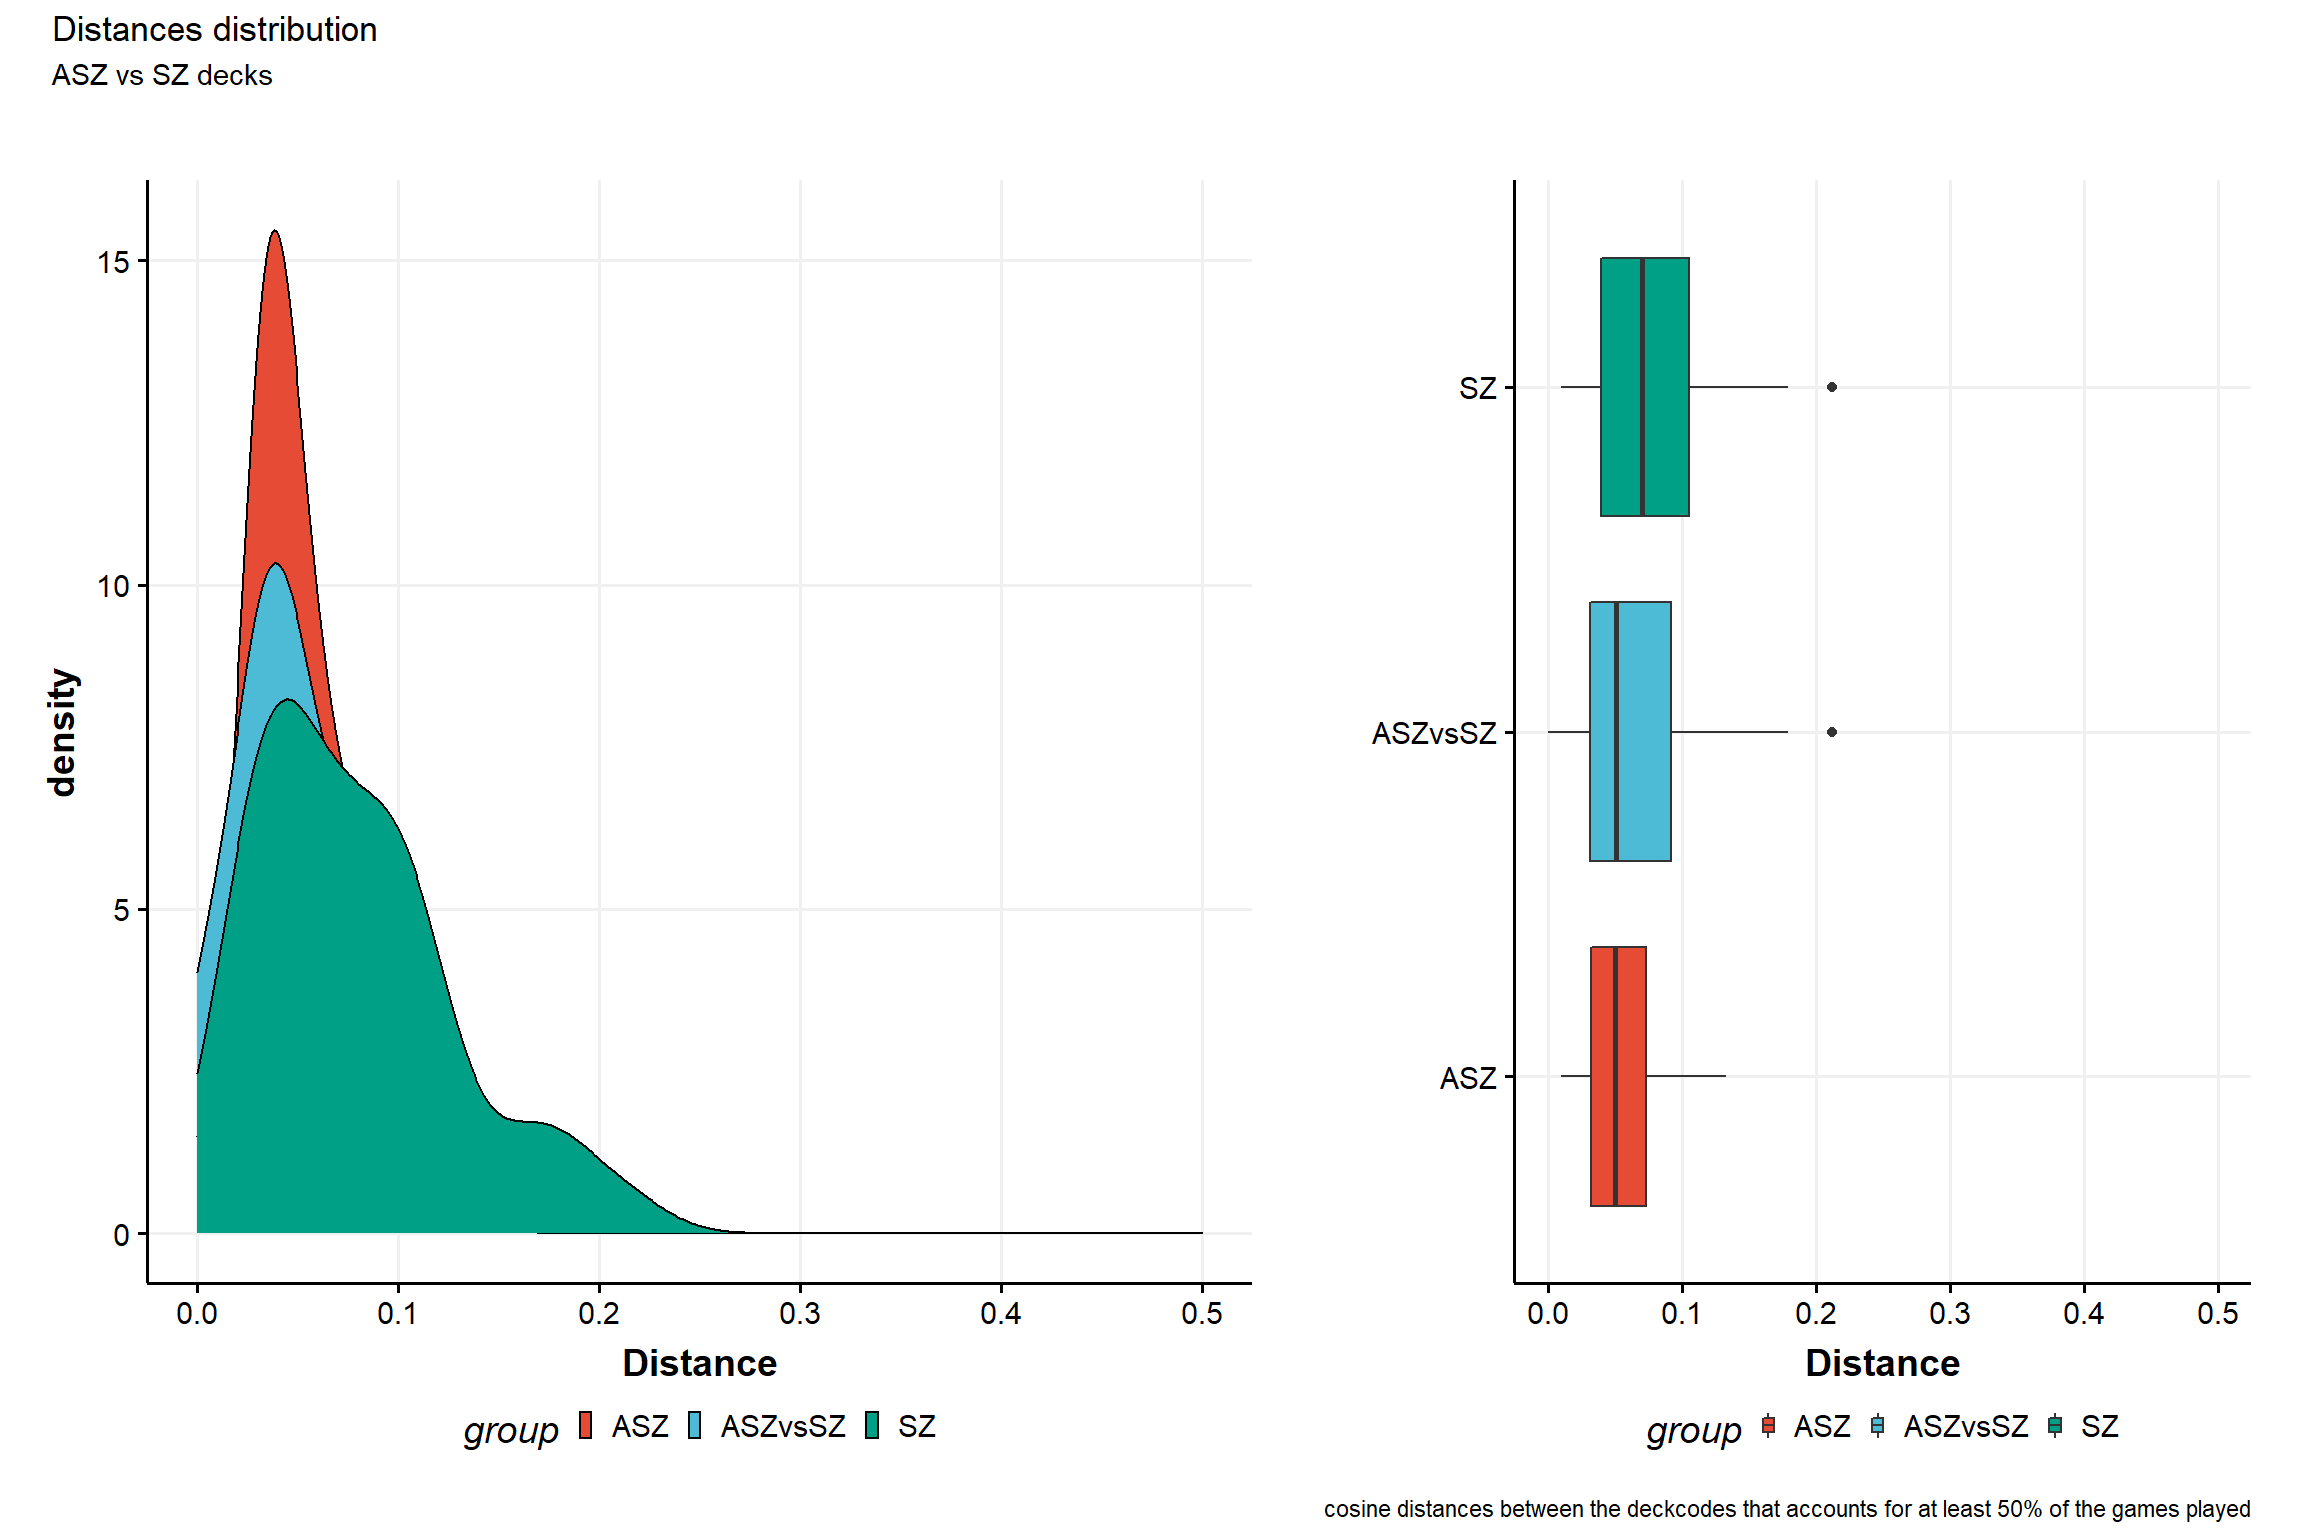 distribution of cosine distances for ASZ vs SZ decks